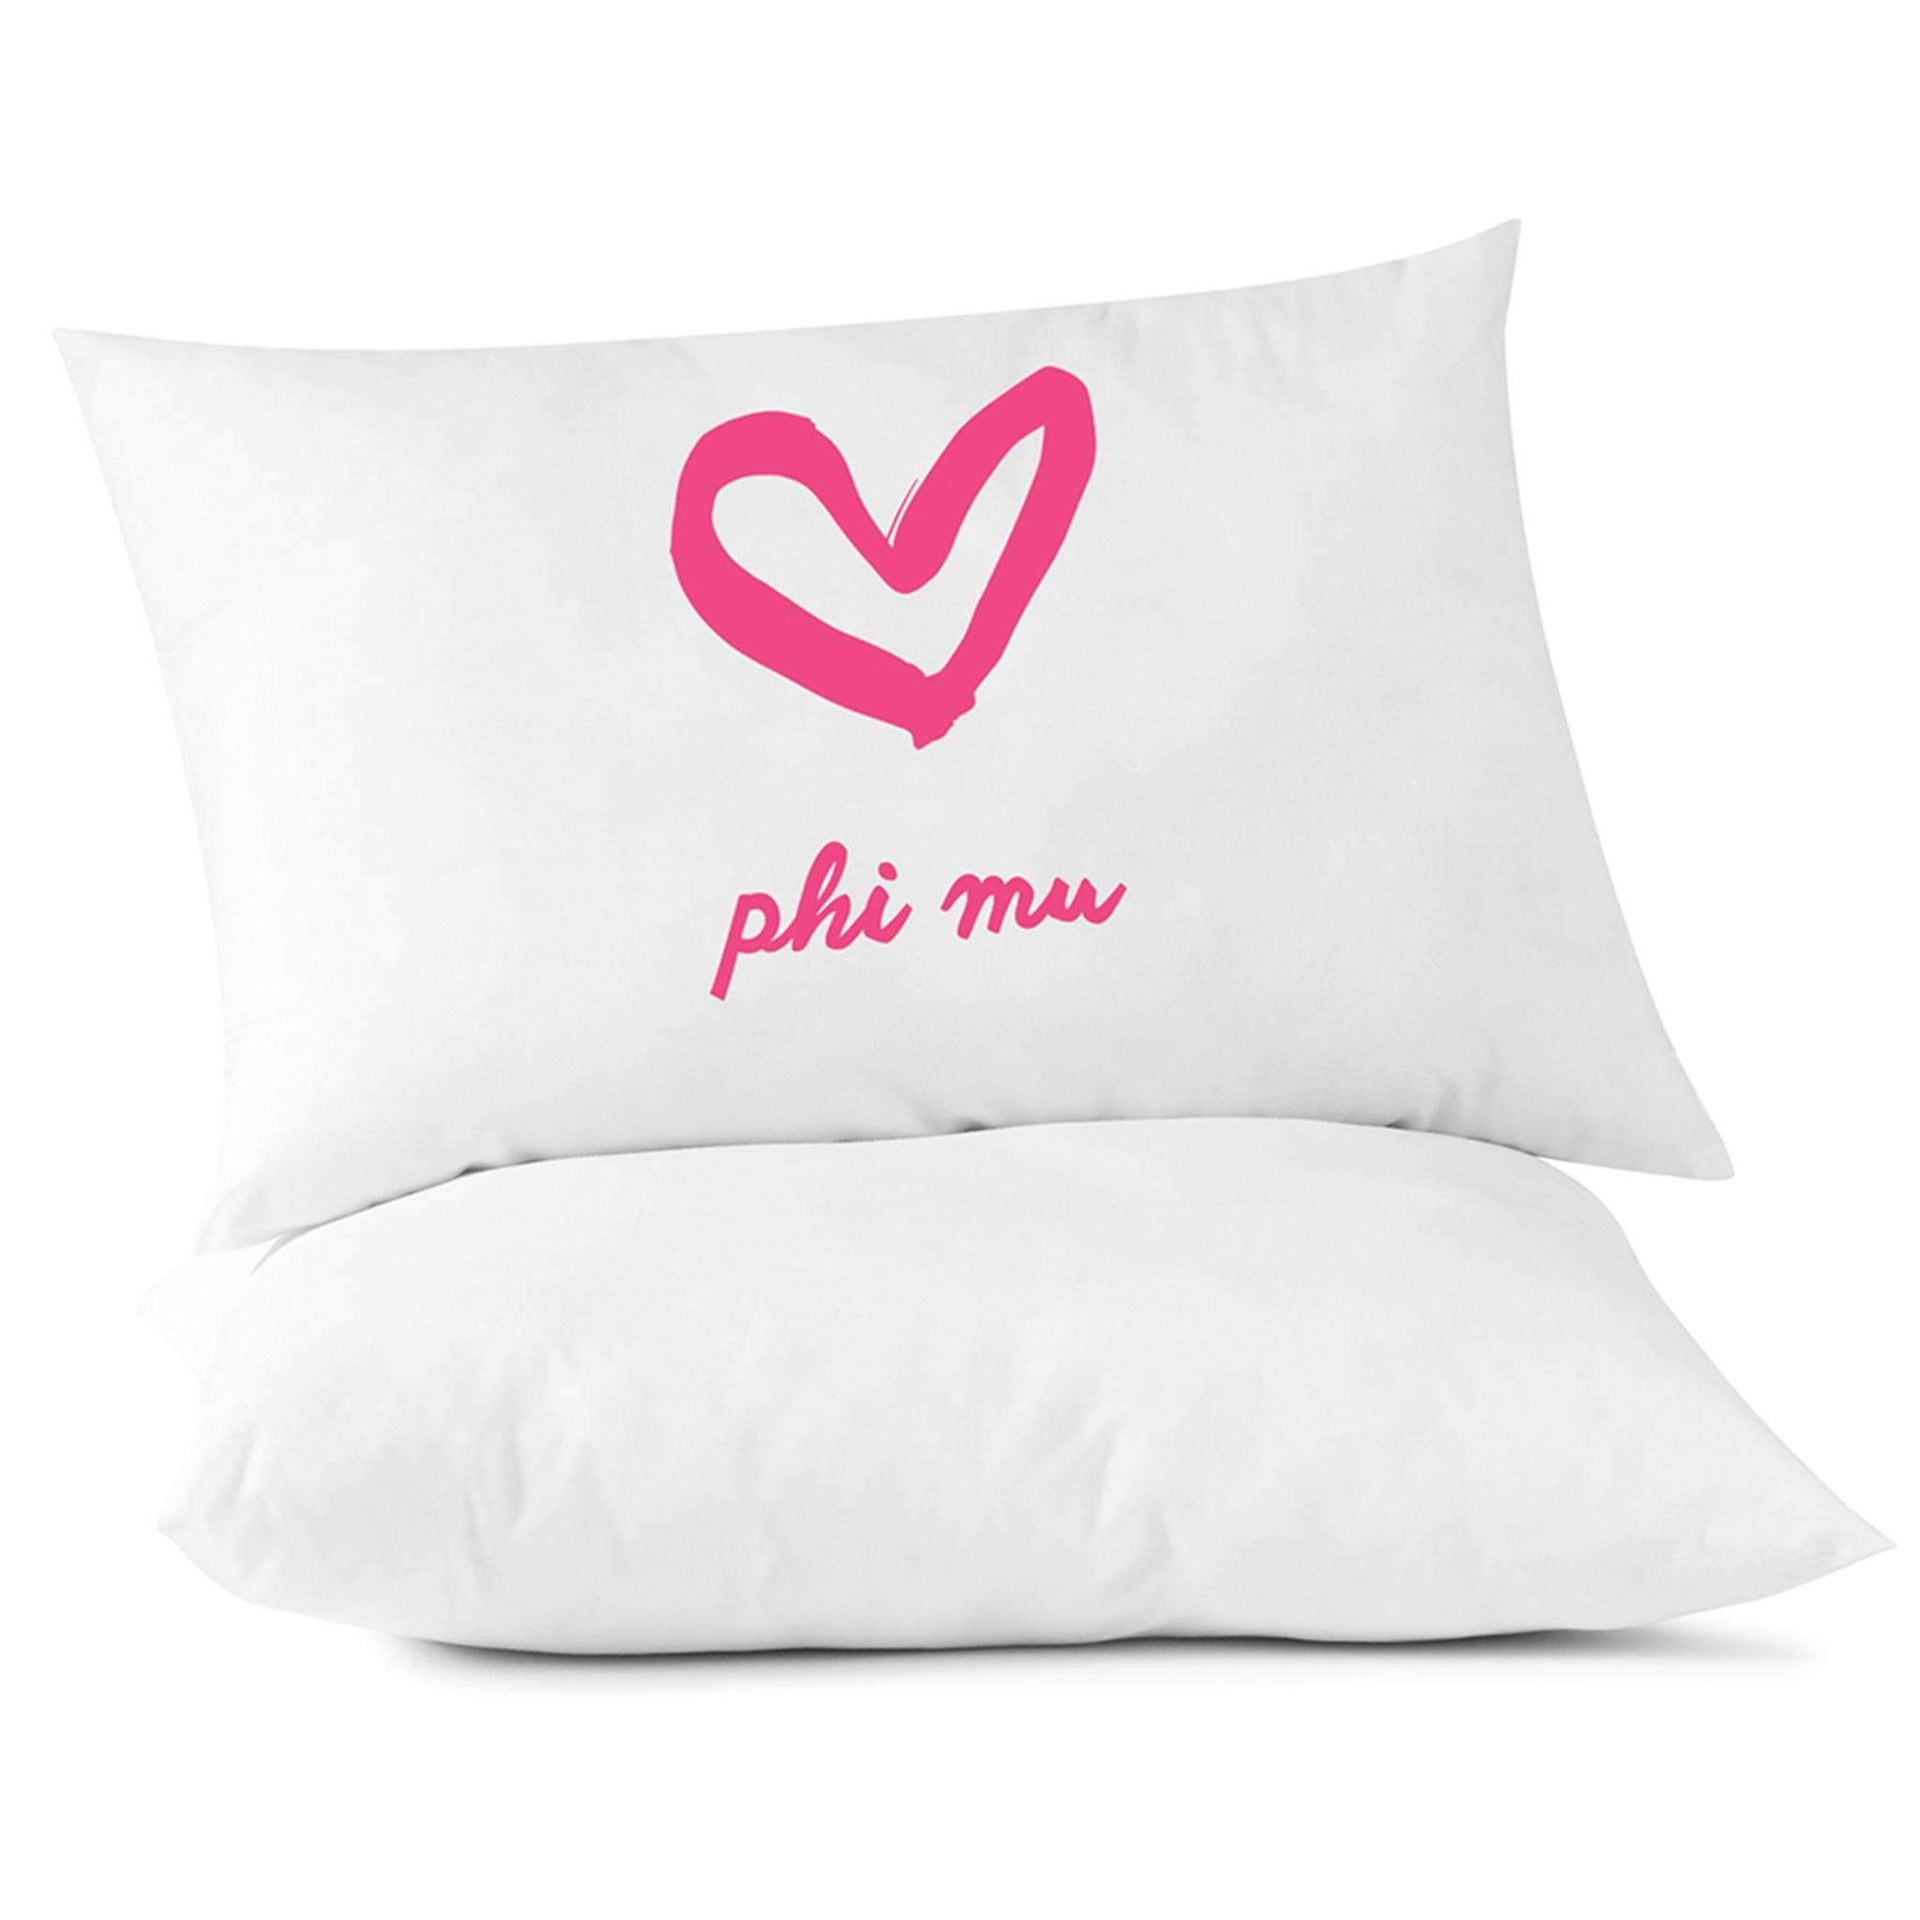 Sorority name heart design Phi Mu custom printed on pillowcase.